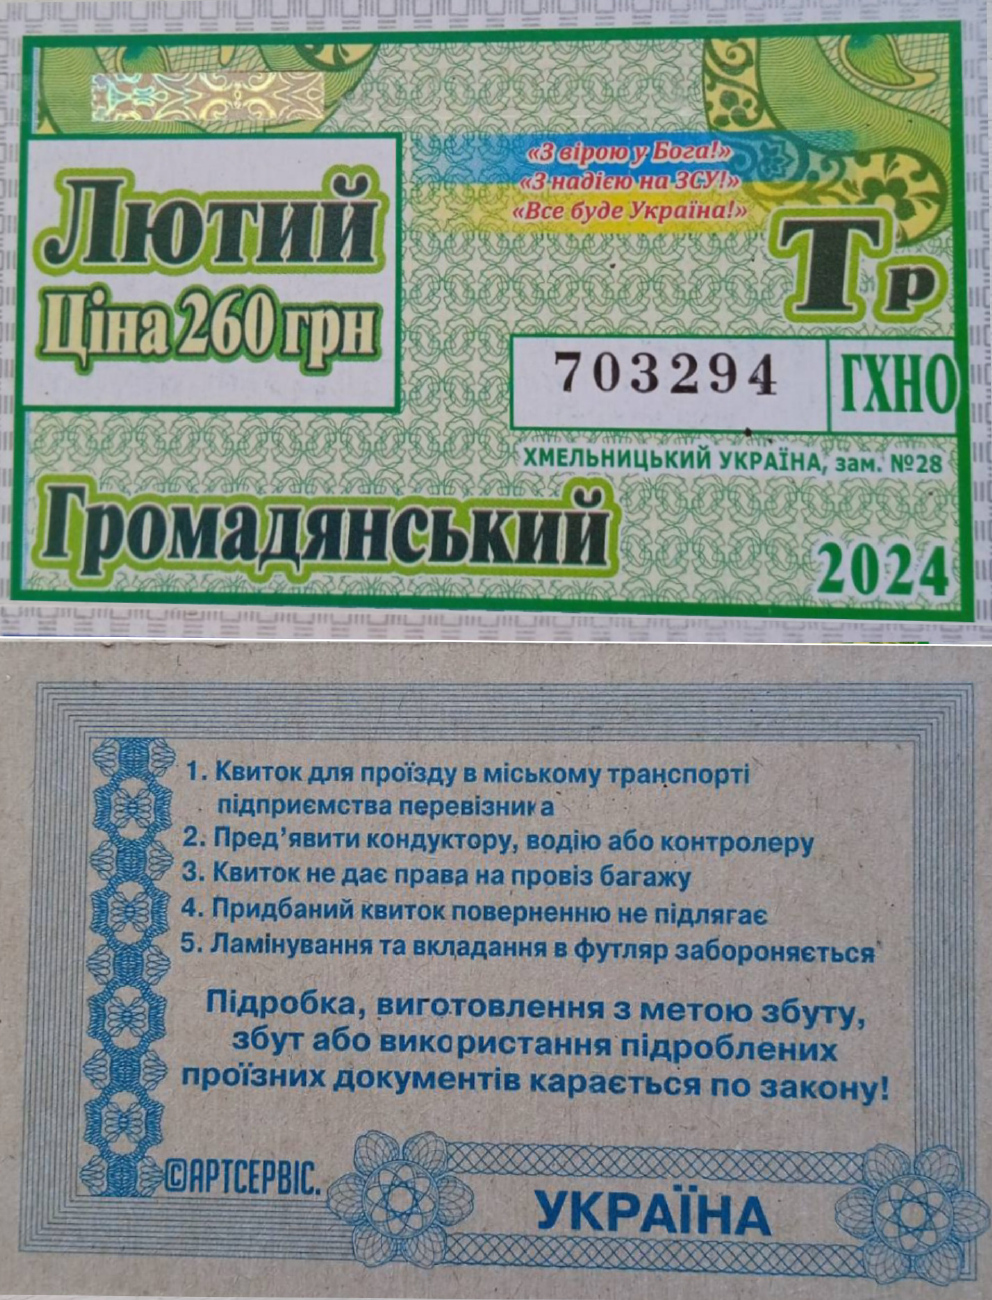 Khmelnitsky — Tickets